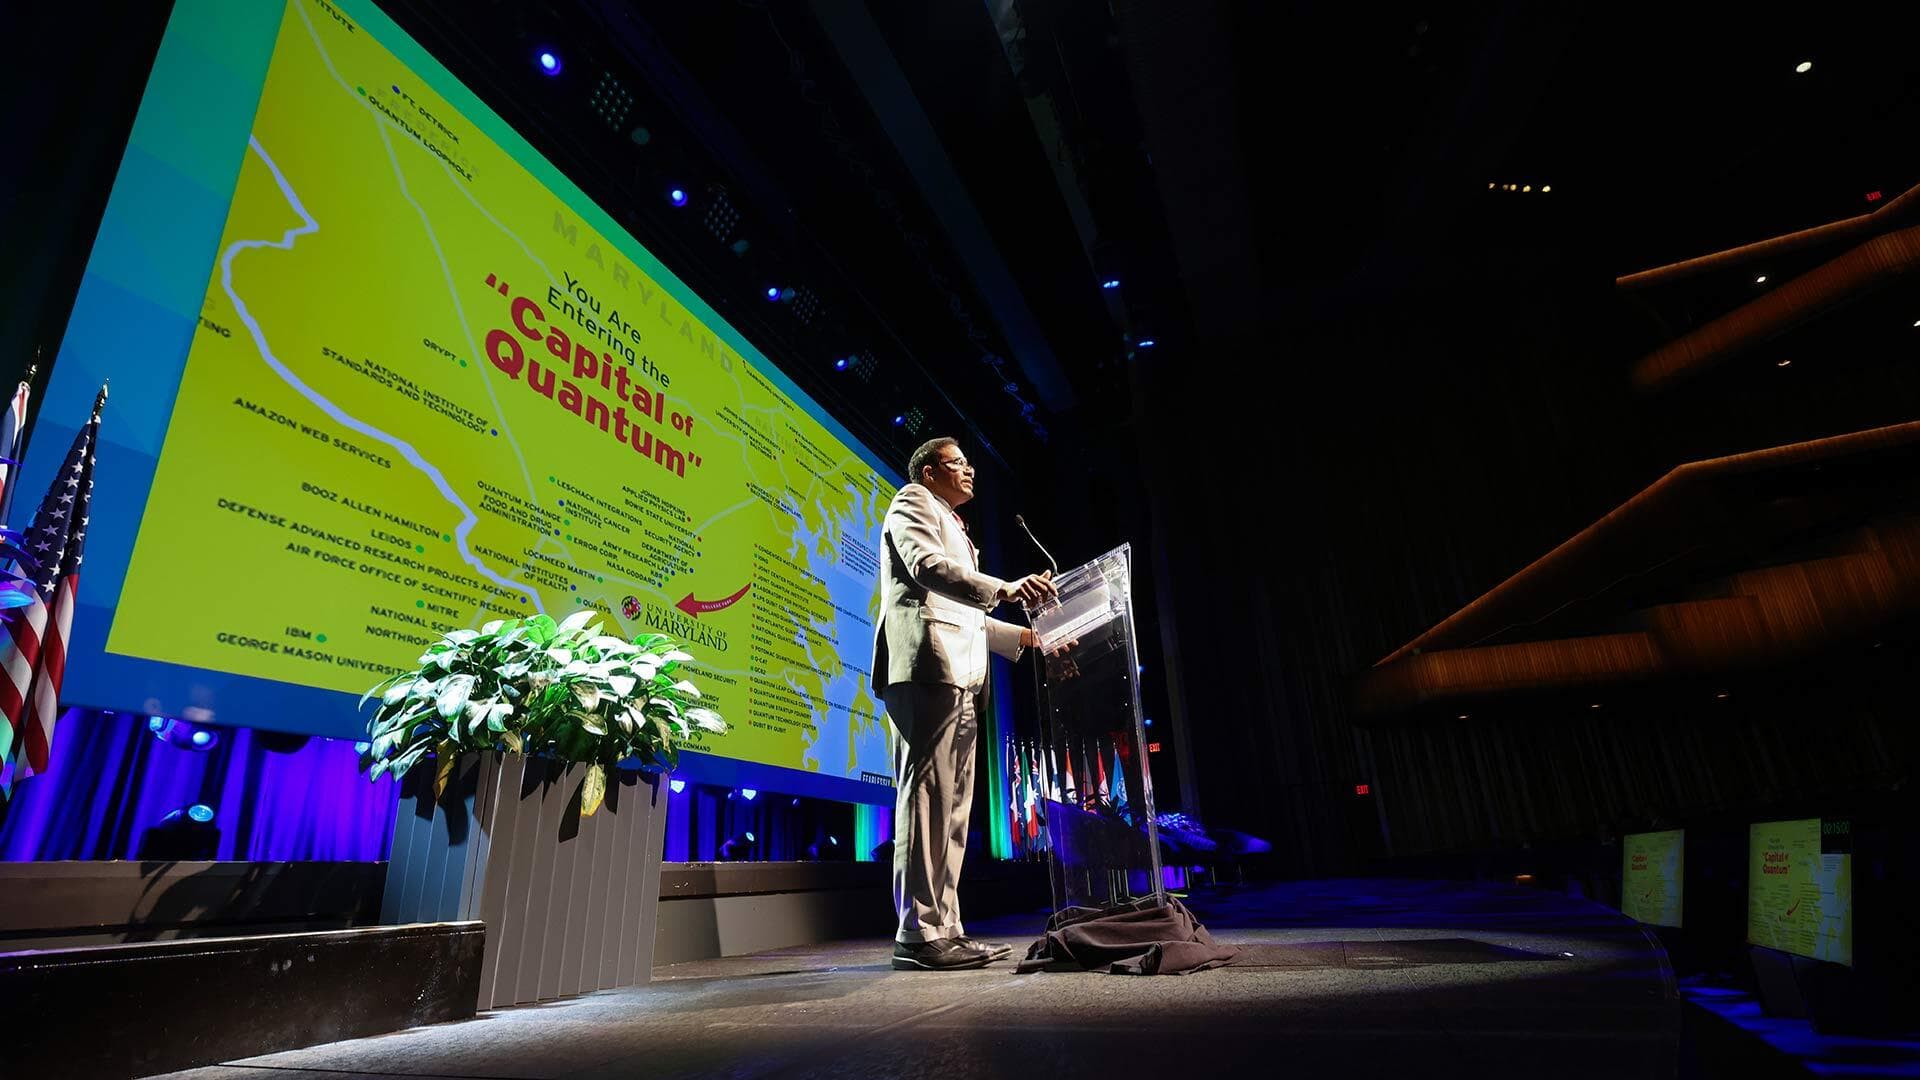 Darryll Pines speaks to audience on stage